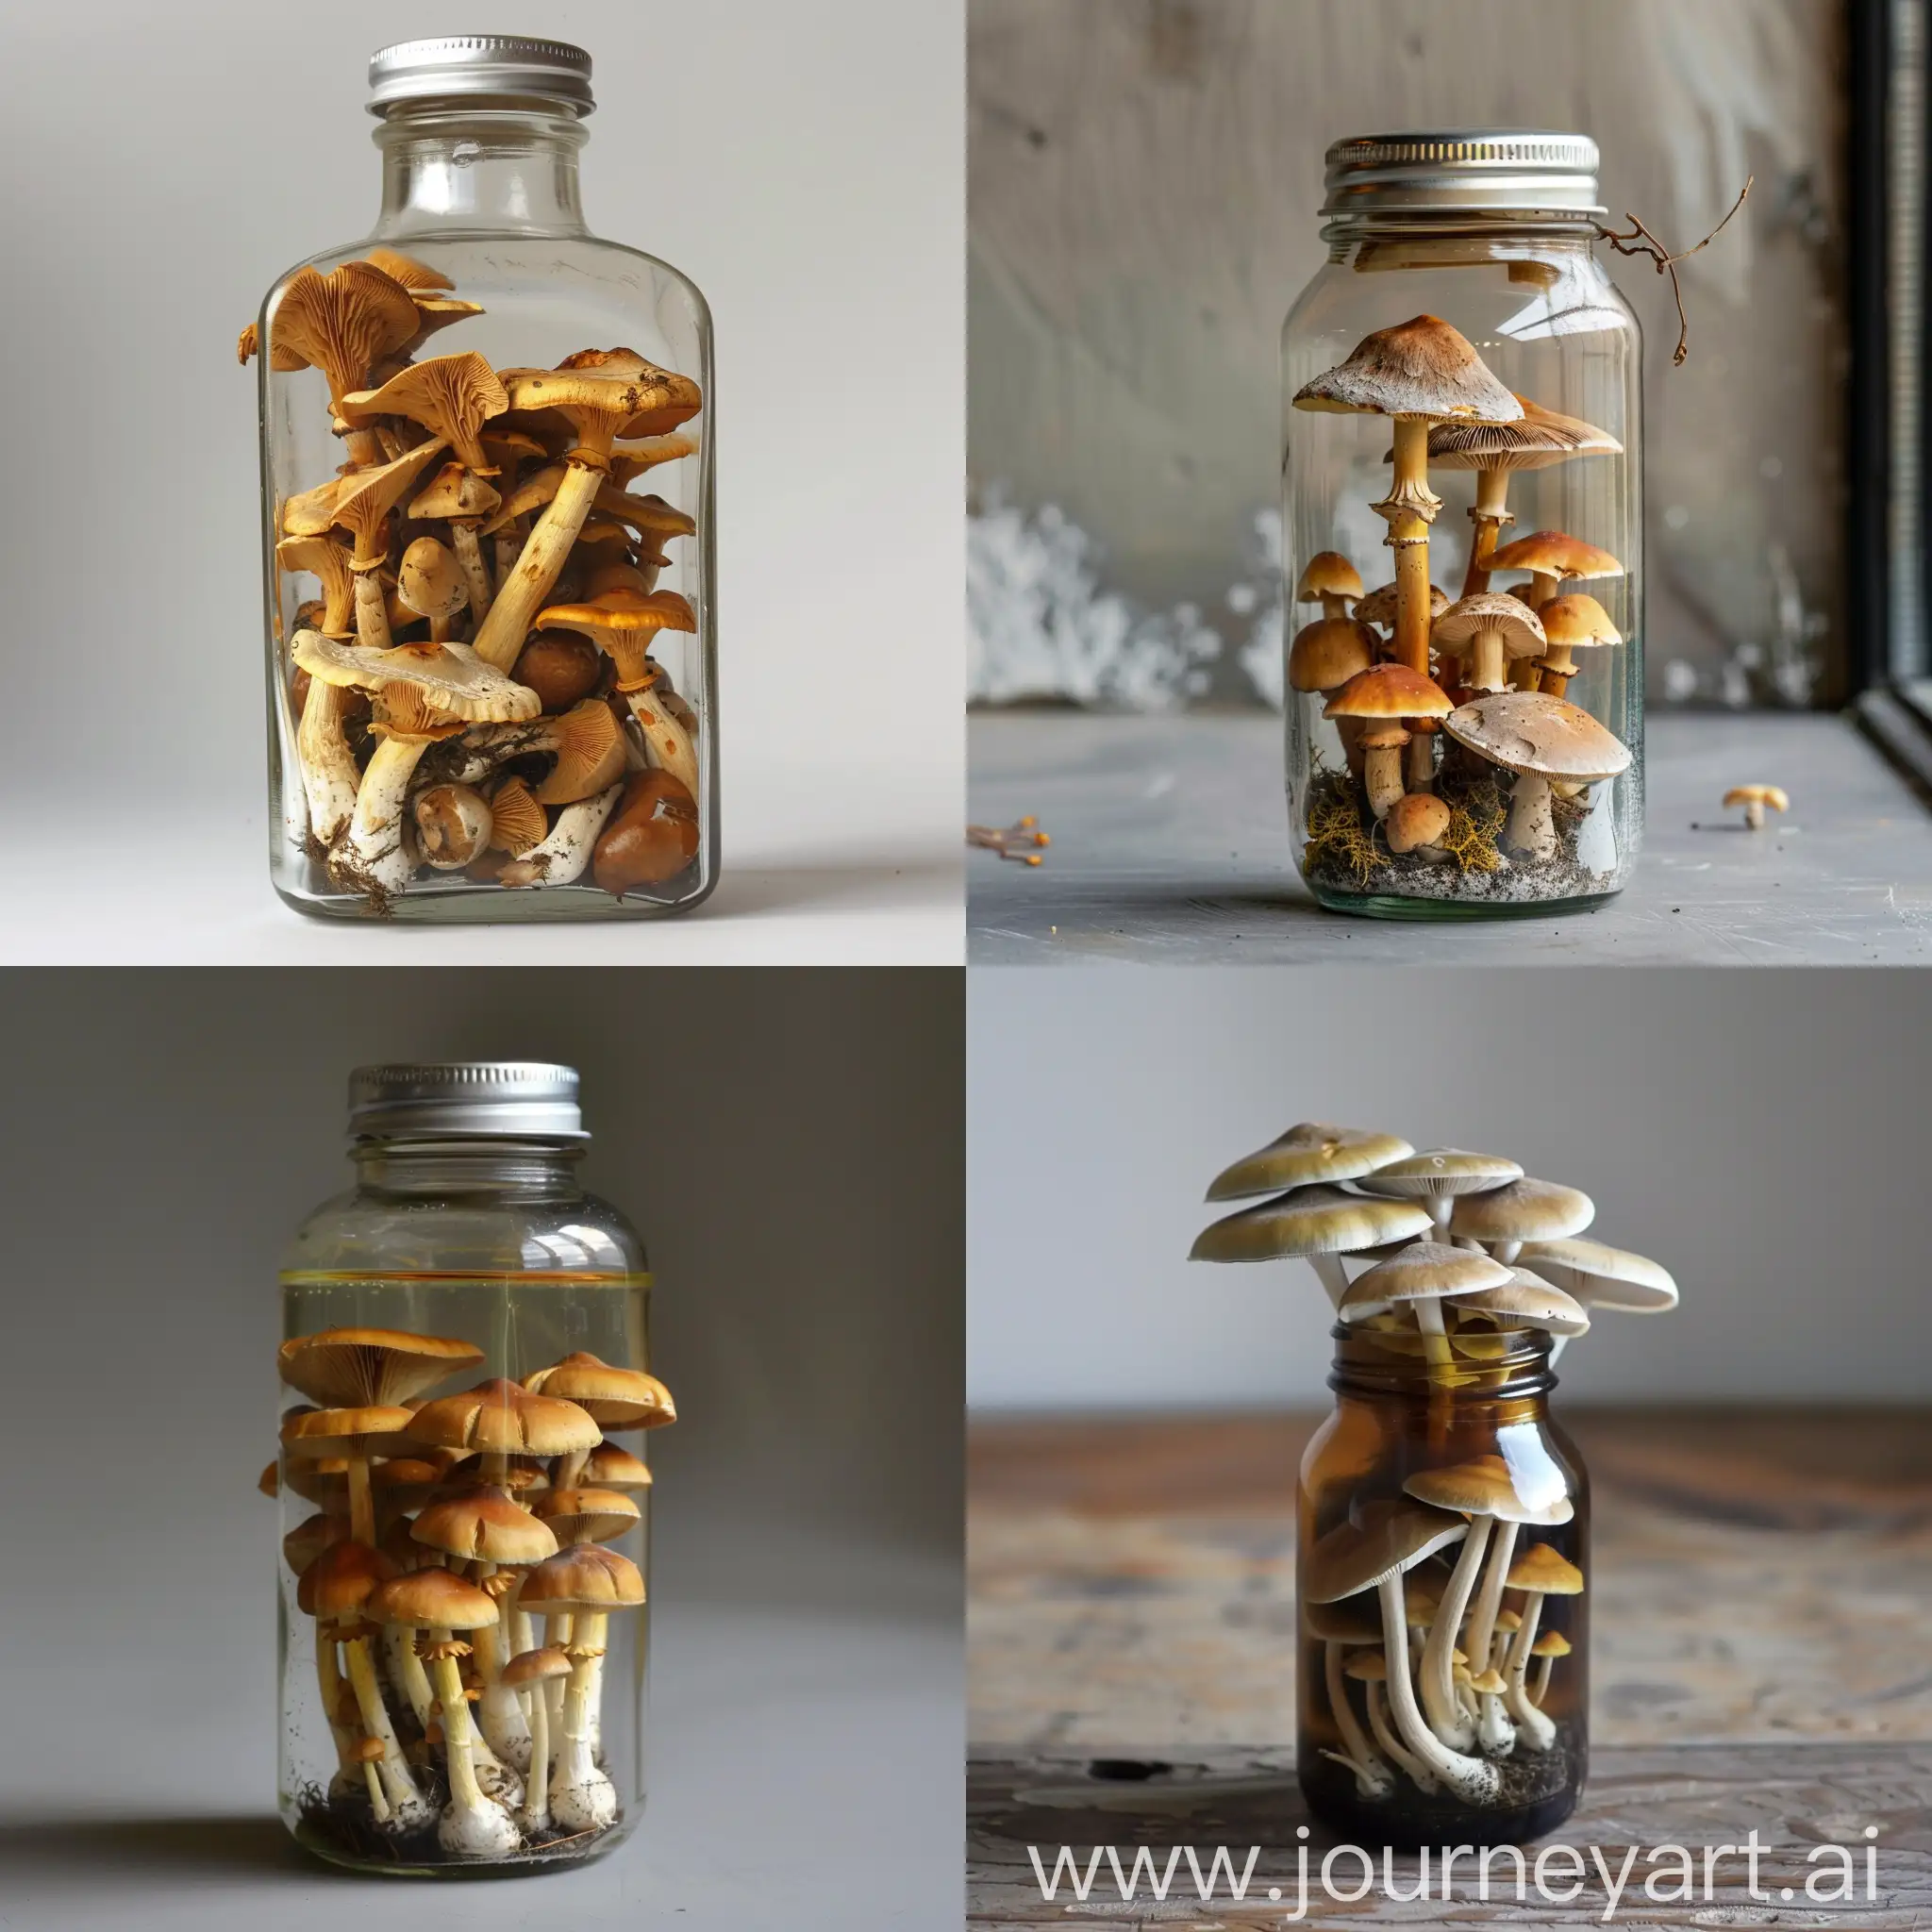 medical mushrooms in the bottle
